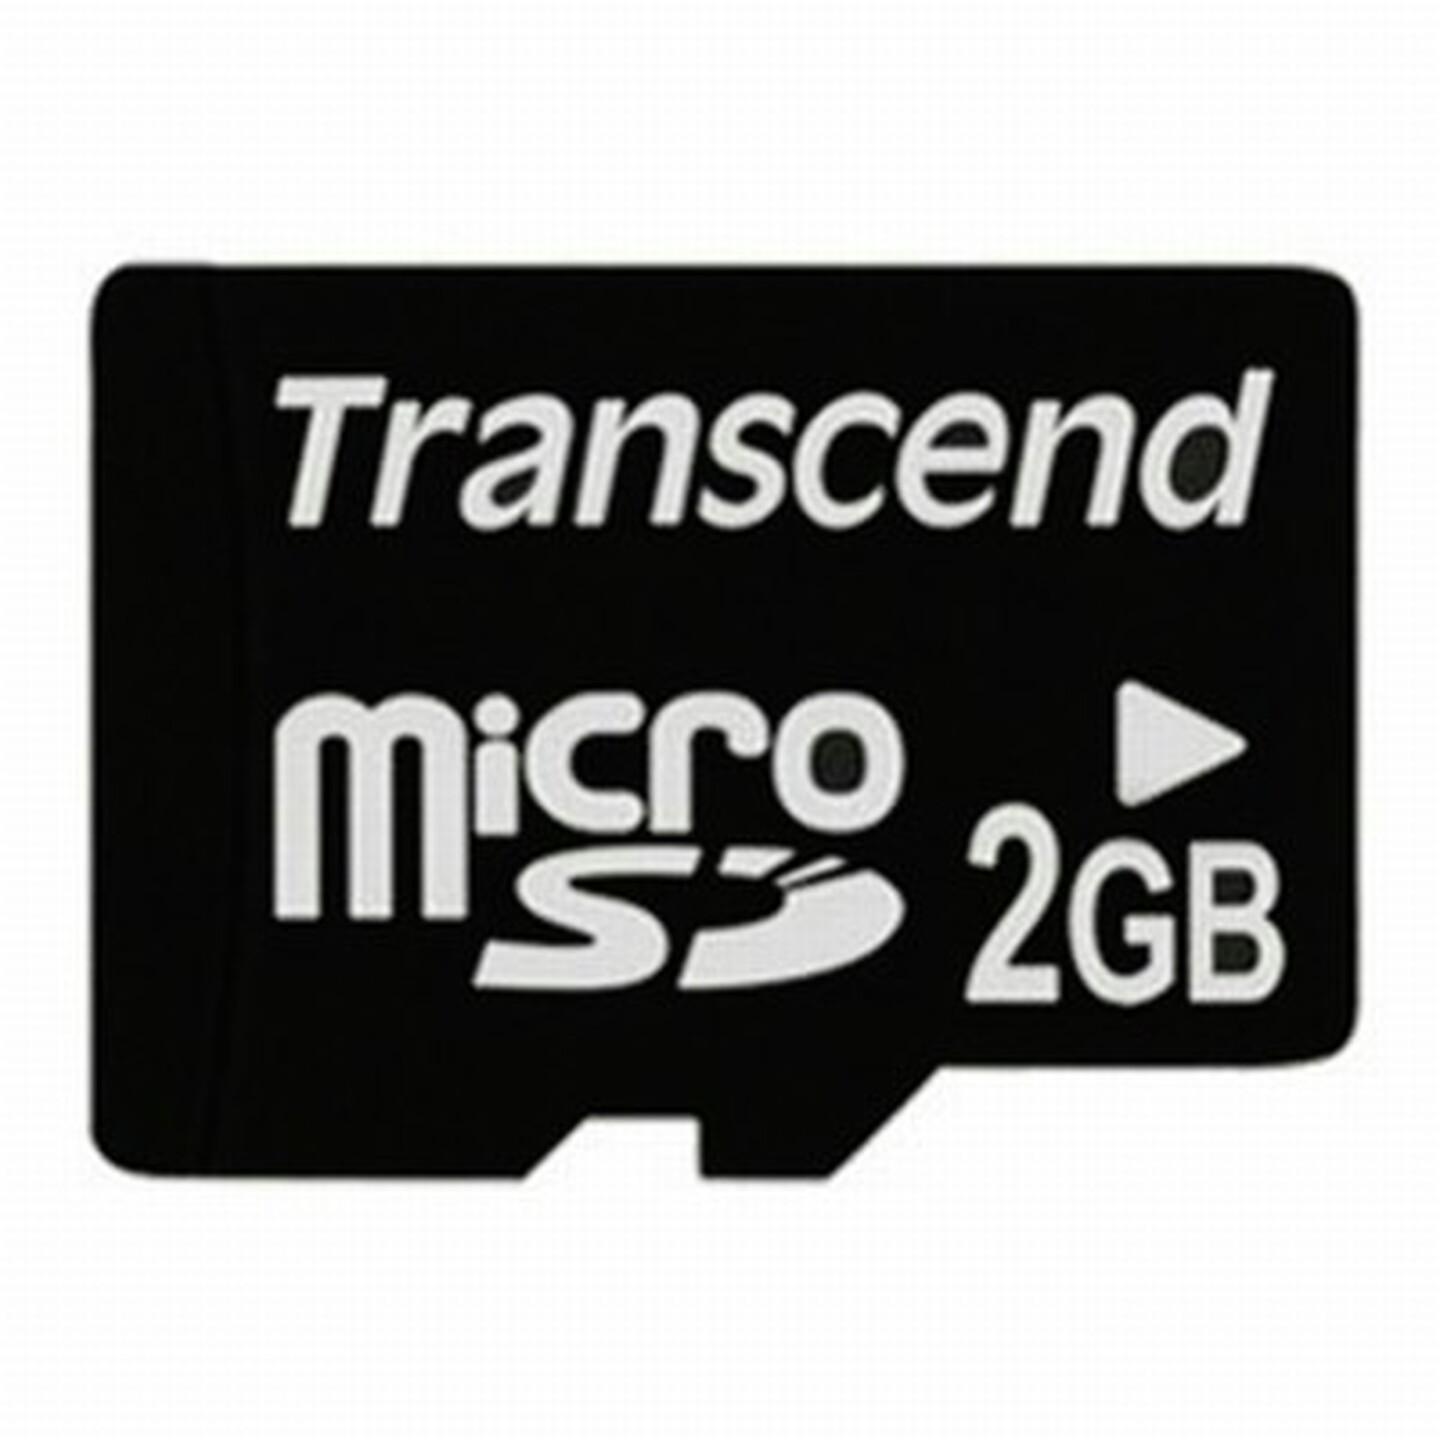 2GB Class 4 microSD Card